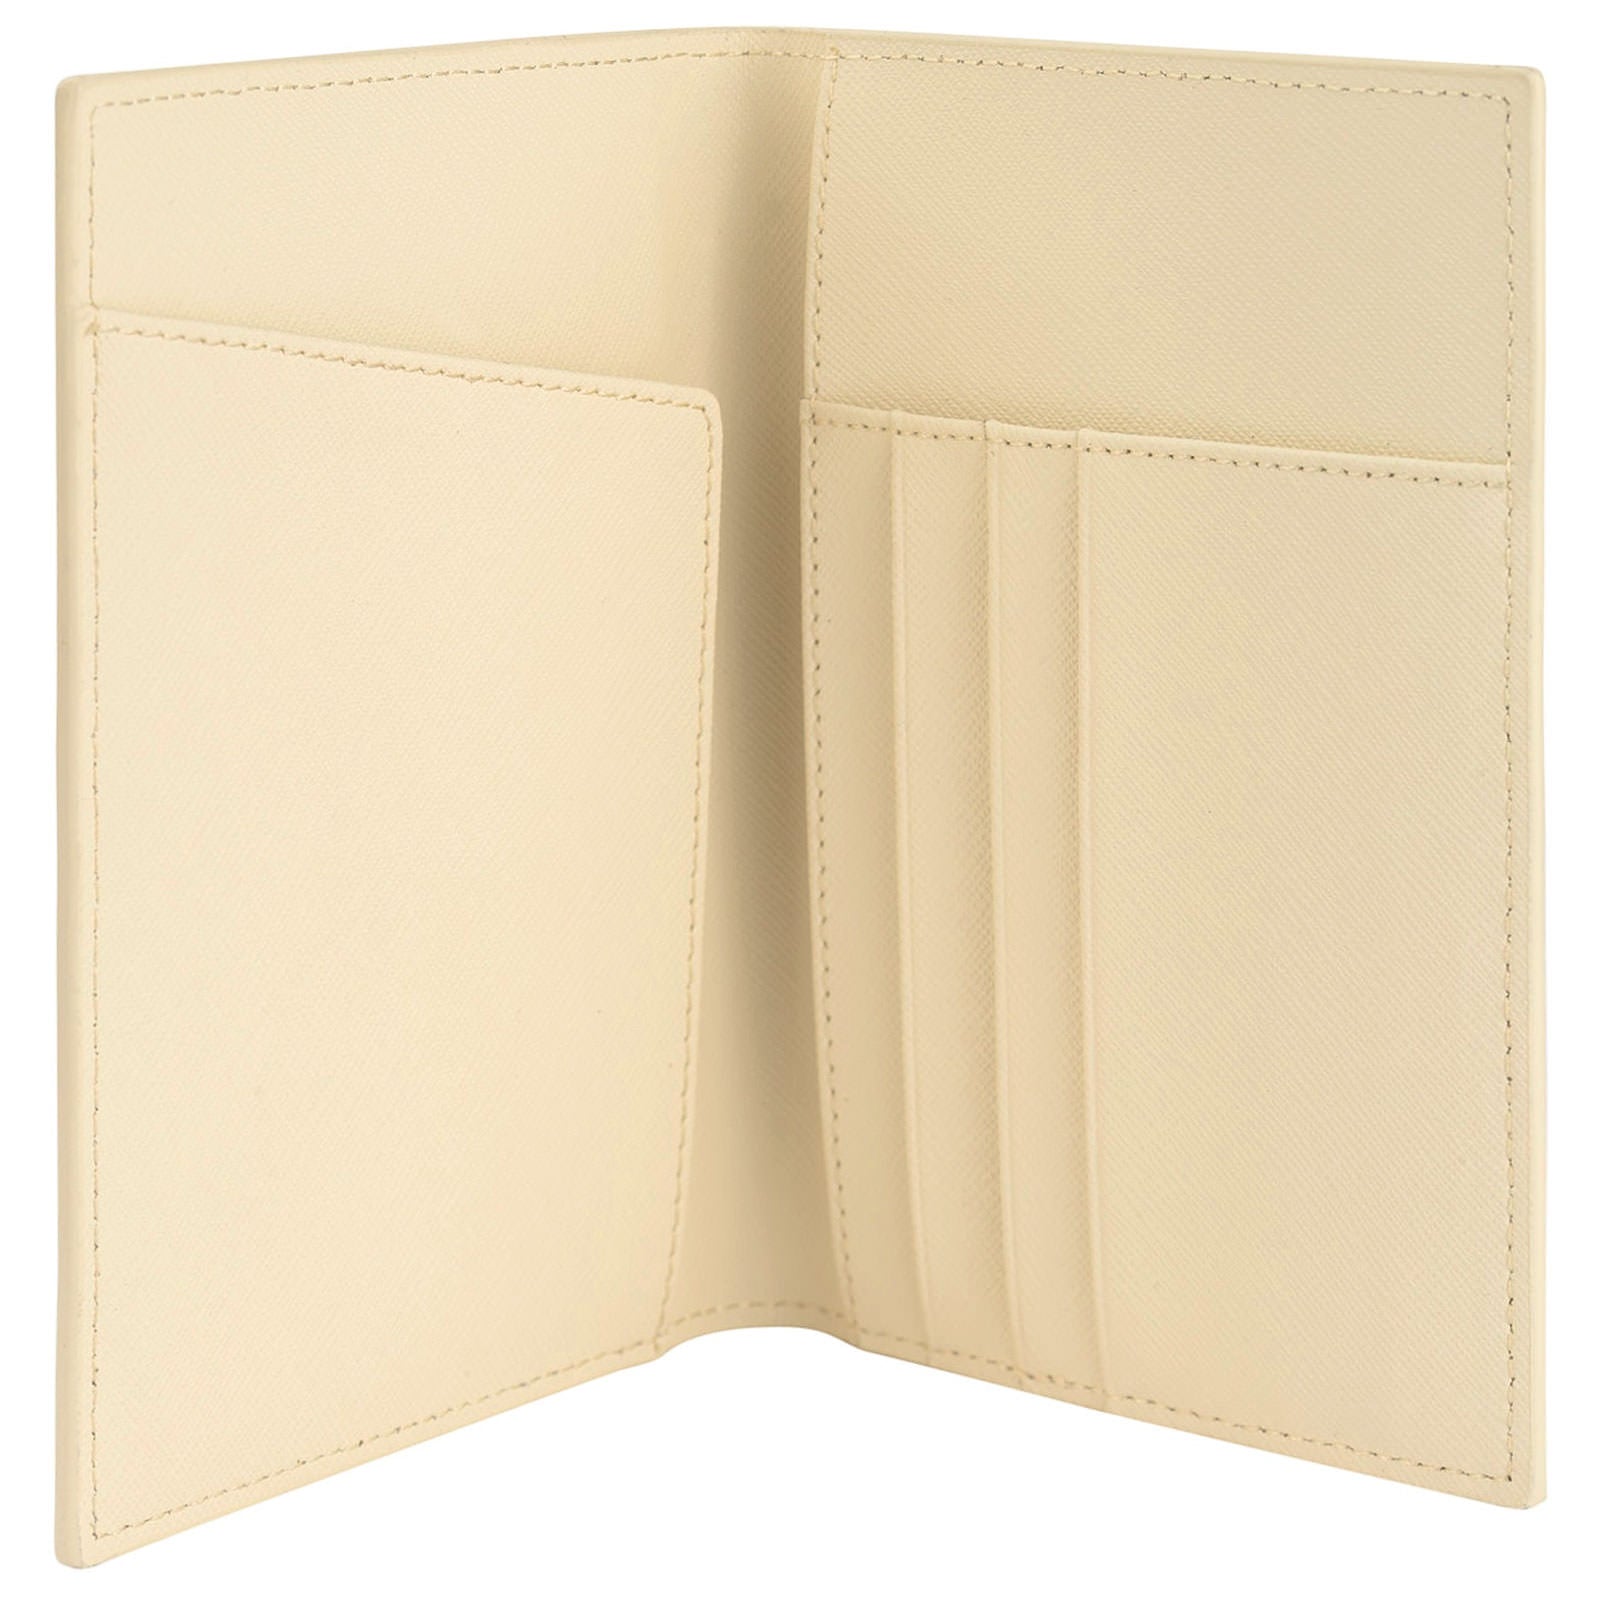 Personalised Ivory Saffiano Leather Passport Holder Inside Pocket